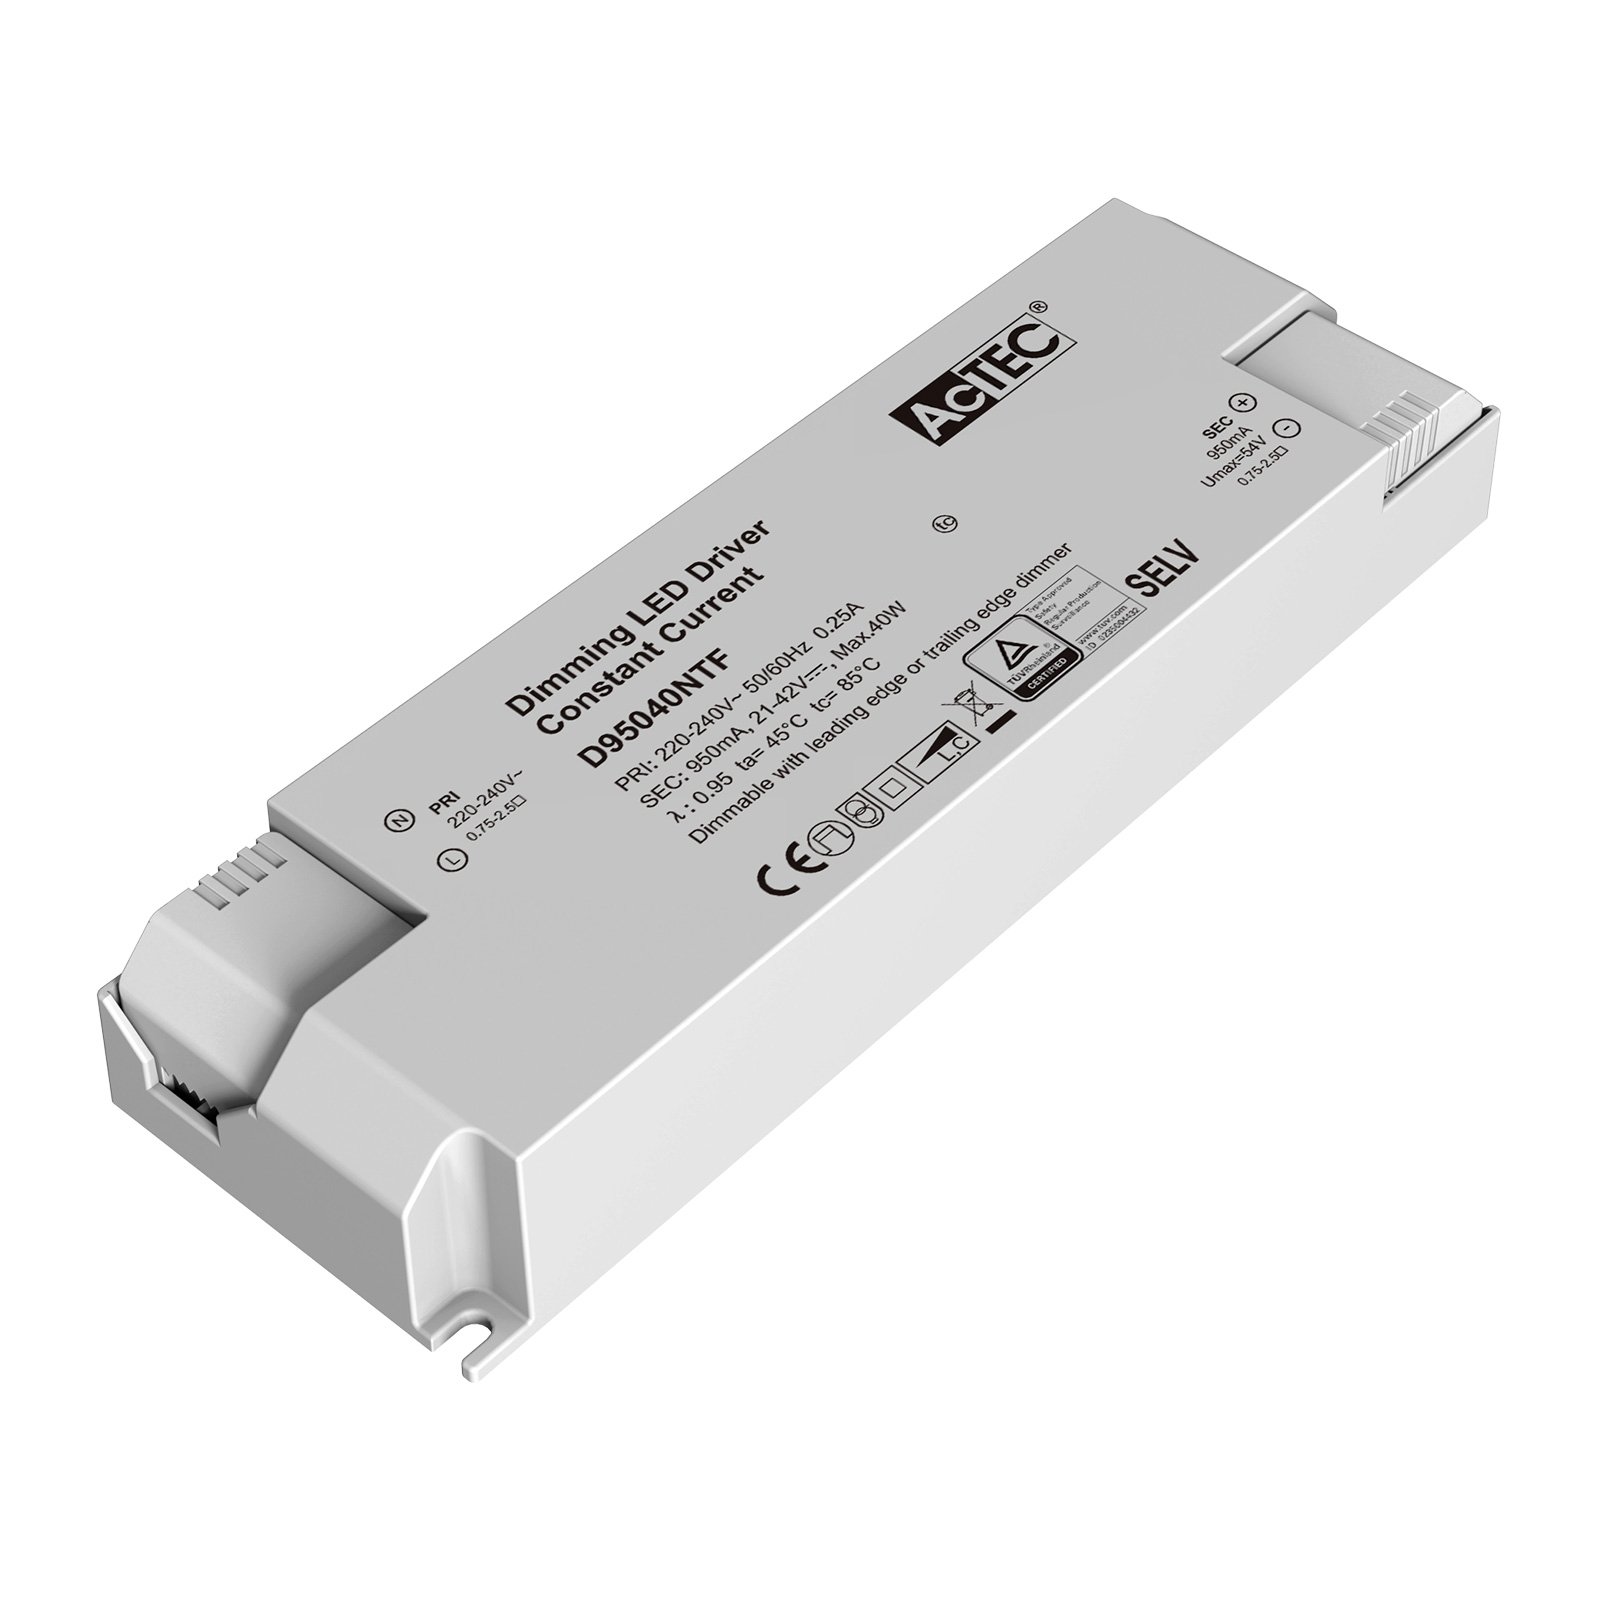 AcTEC Triac LED budič CC max. 40 W 950mA